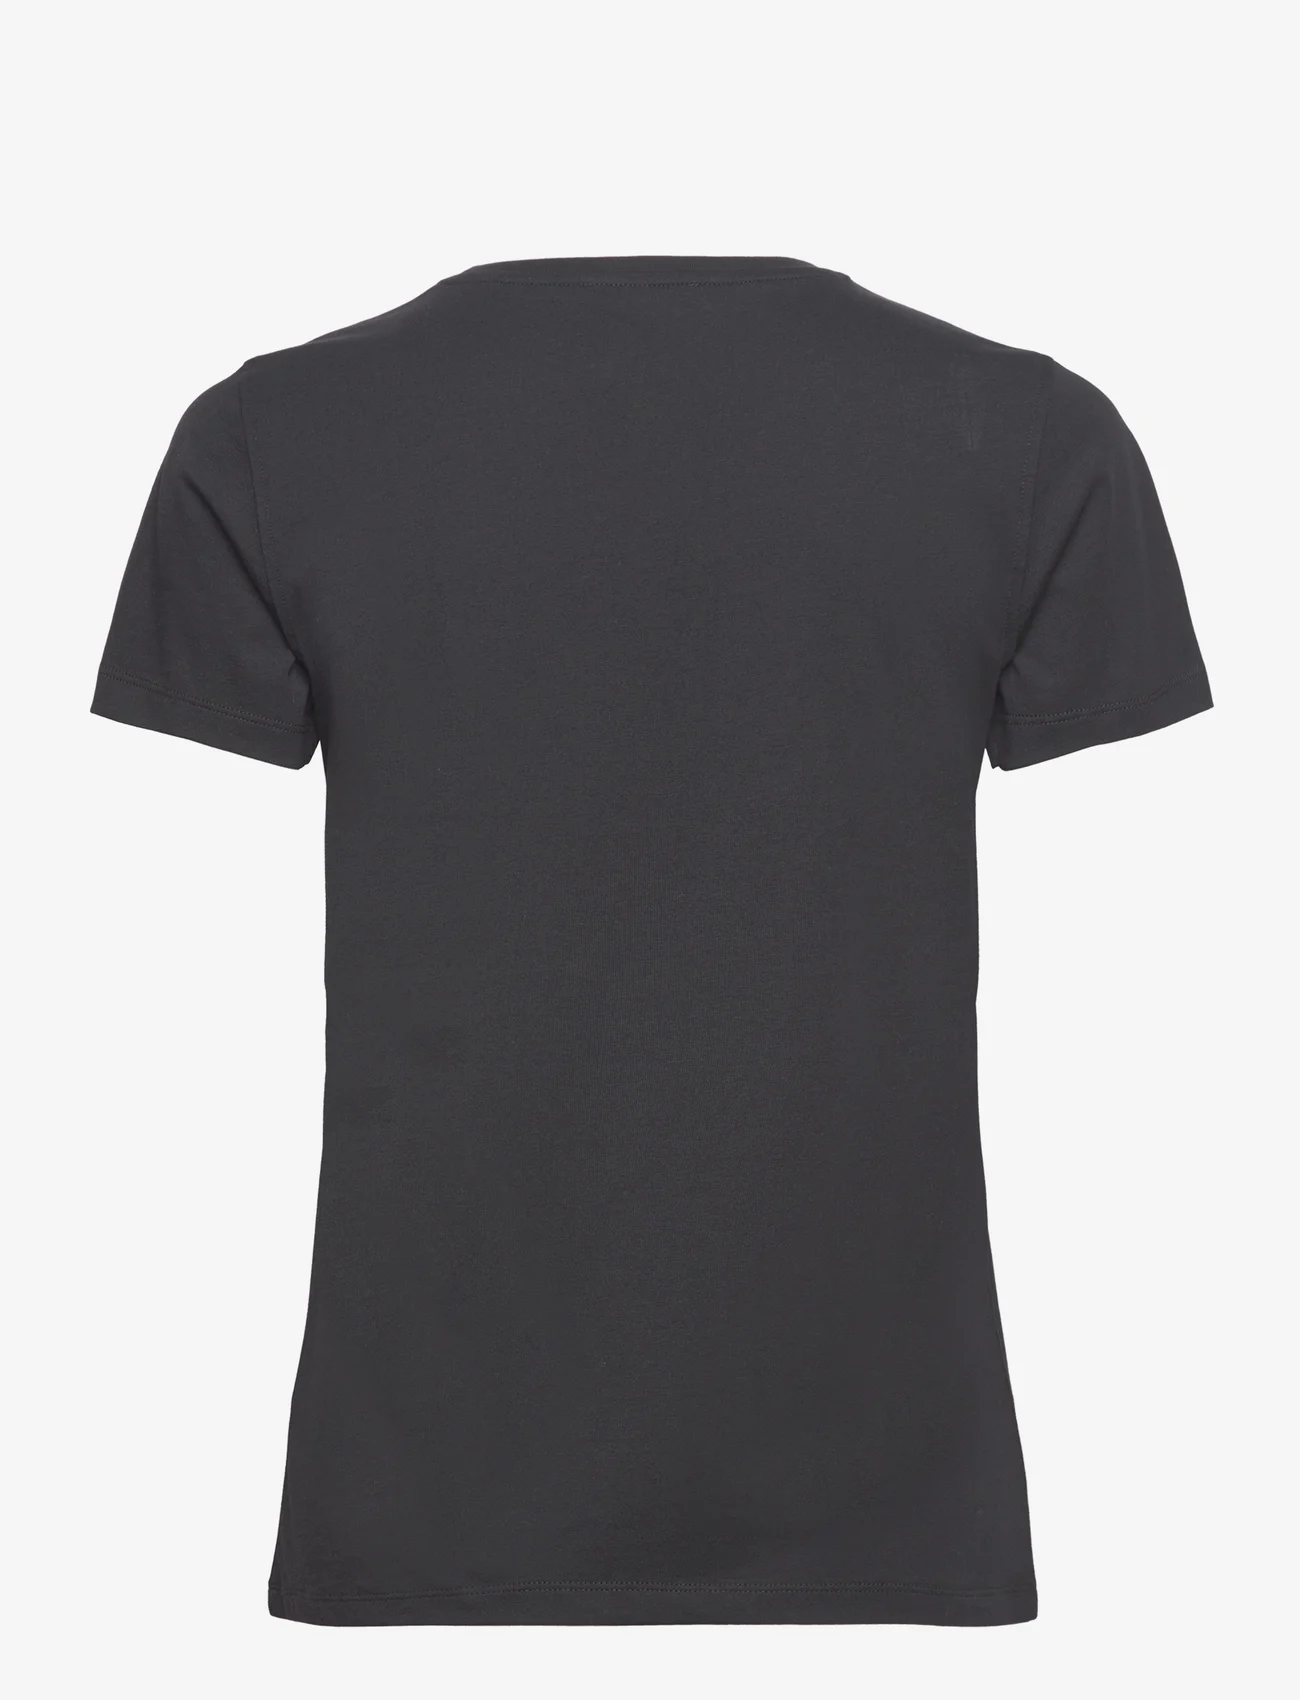 JOTT - ROSAS - marškinėliai - noir - 1